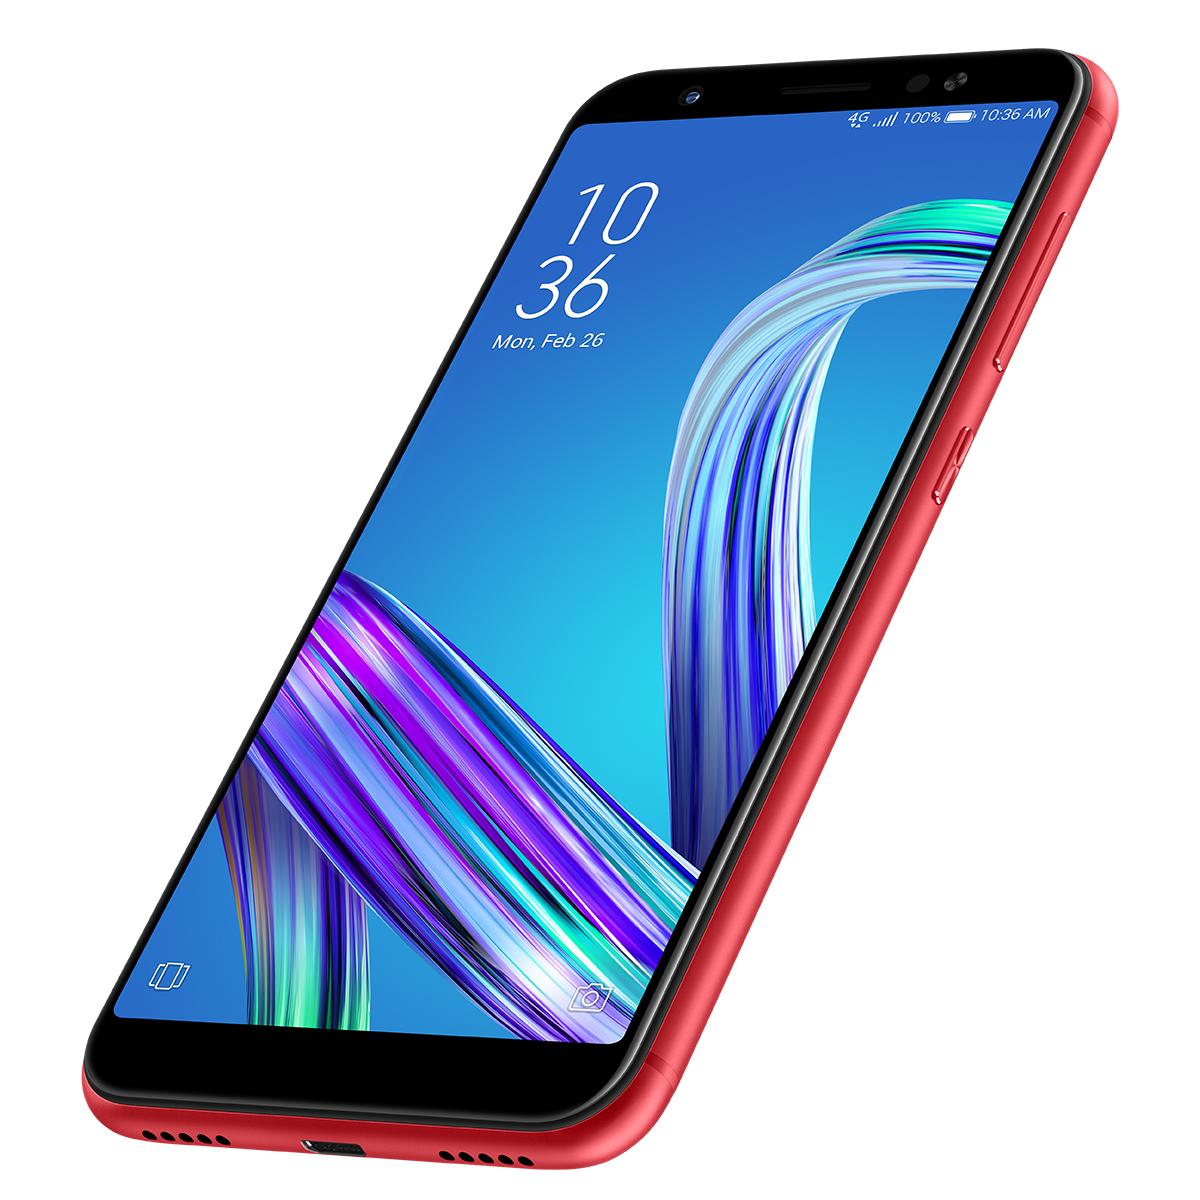 Asus ZenFone Max ZB555KL-4C146EU Red smartphone